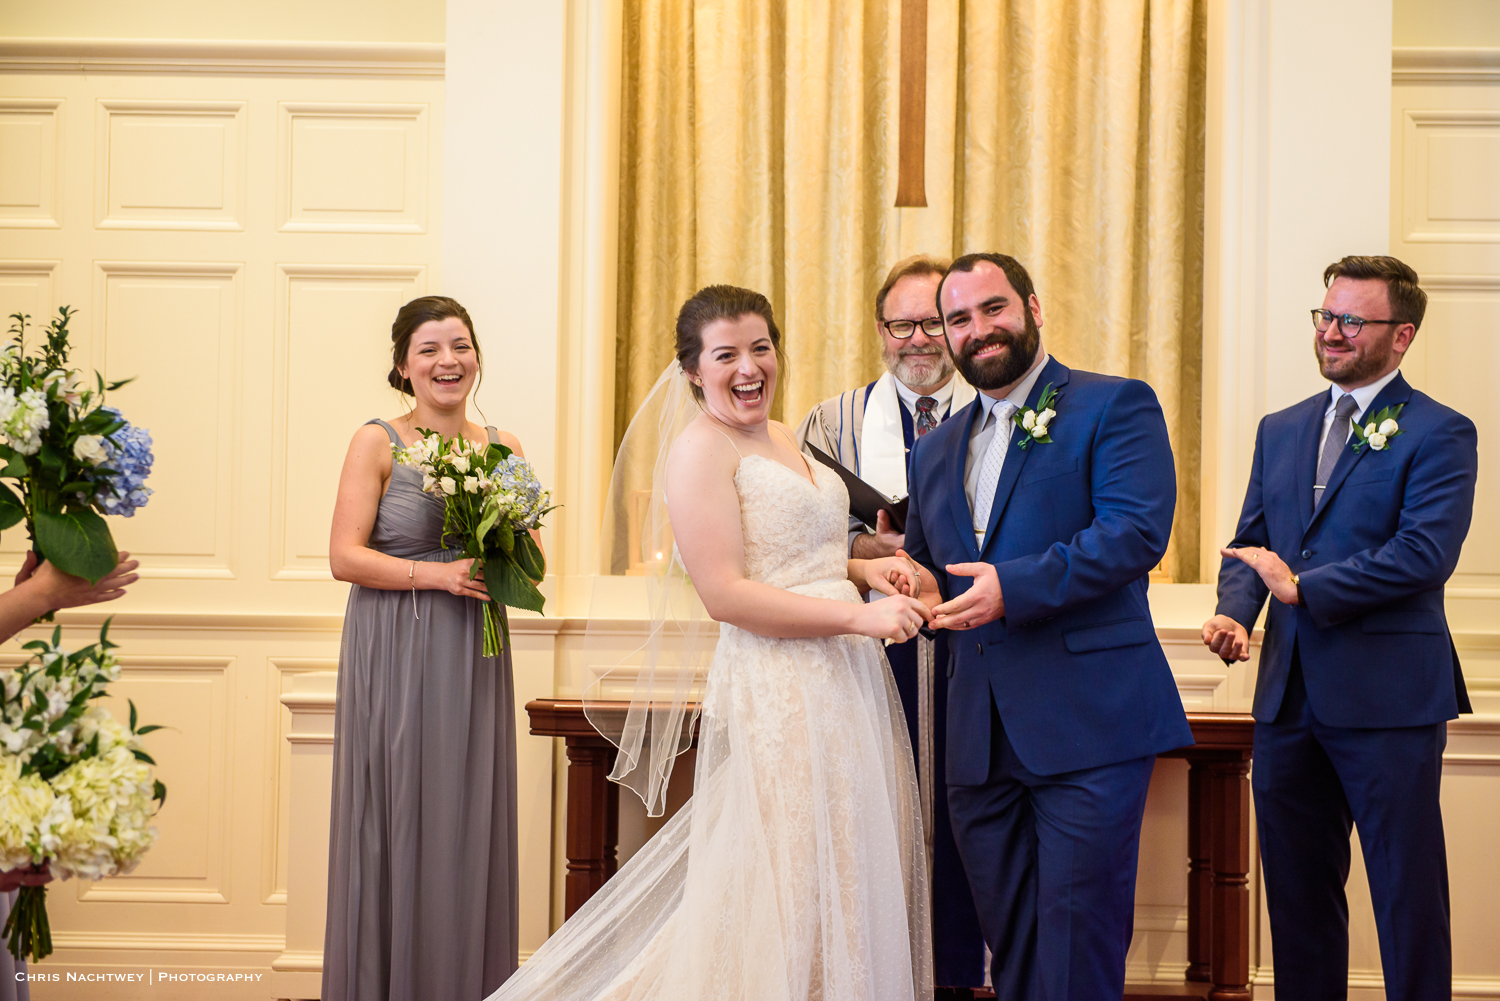 wedding-photos-united-states-coast-guard-academy-chris-nachtwey-photography-2019-14.jpg